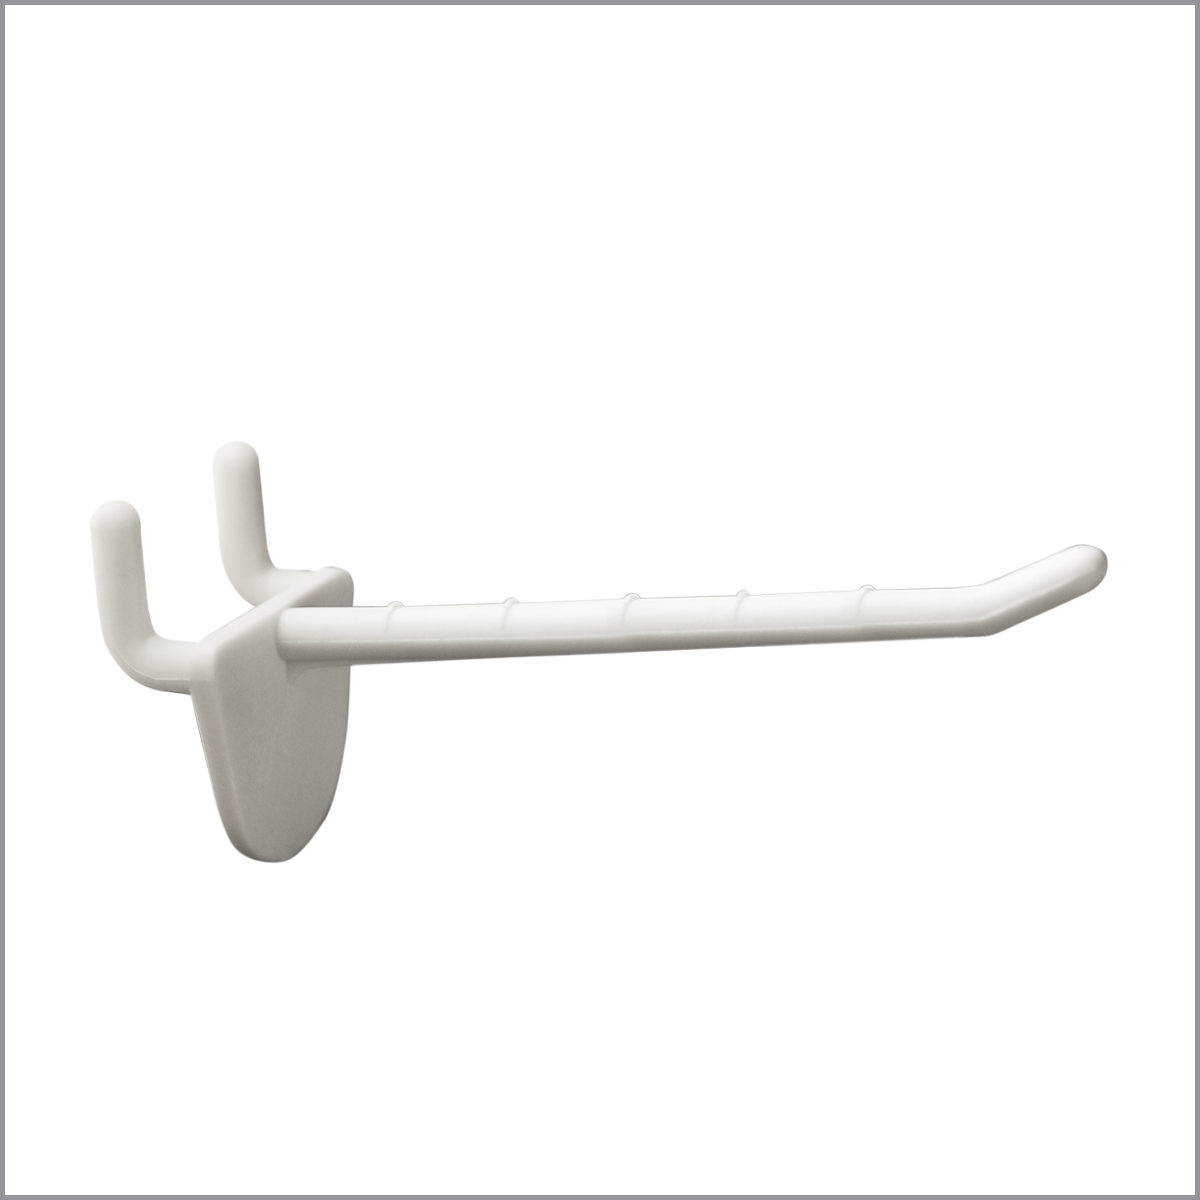 Double Prong Hook White Plastic Pegboard/Slatwall Merchandising